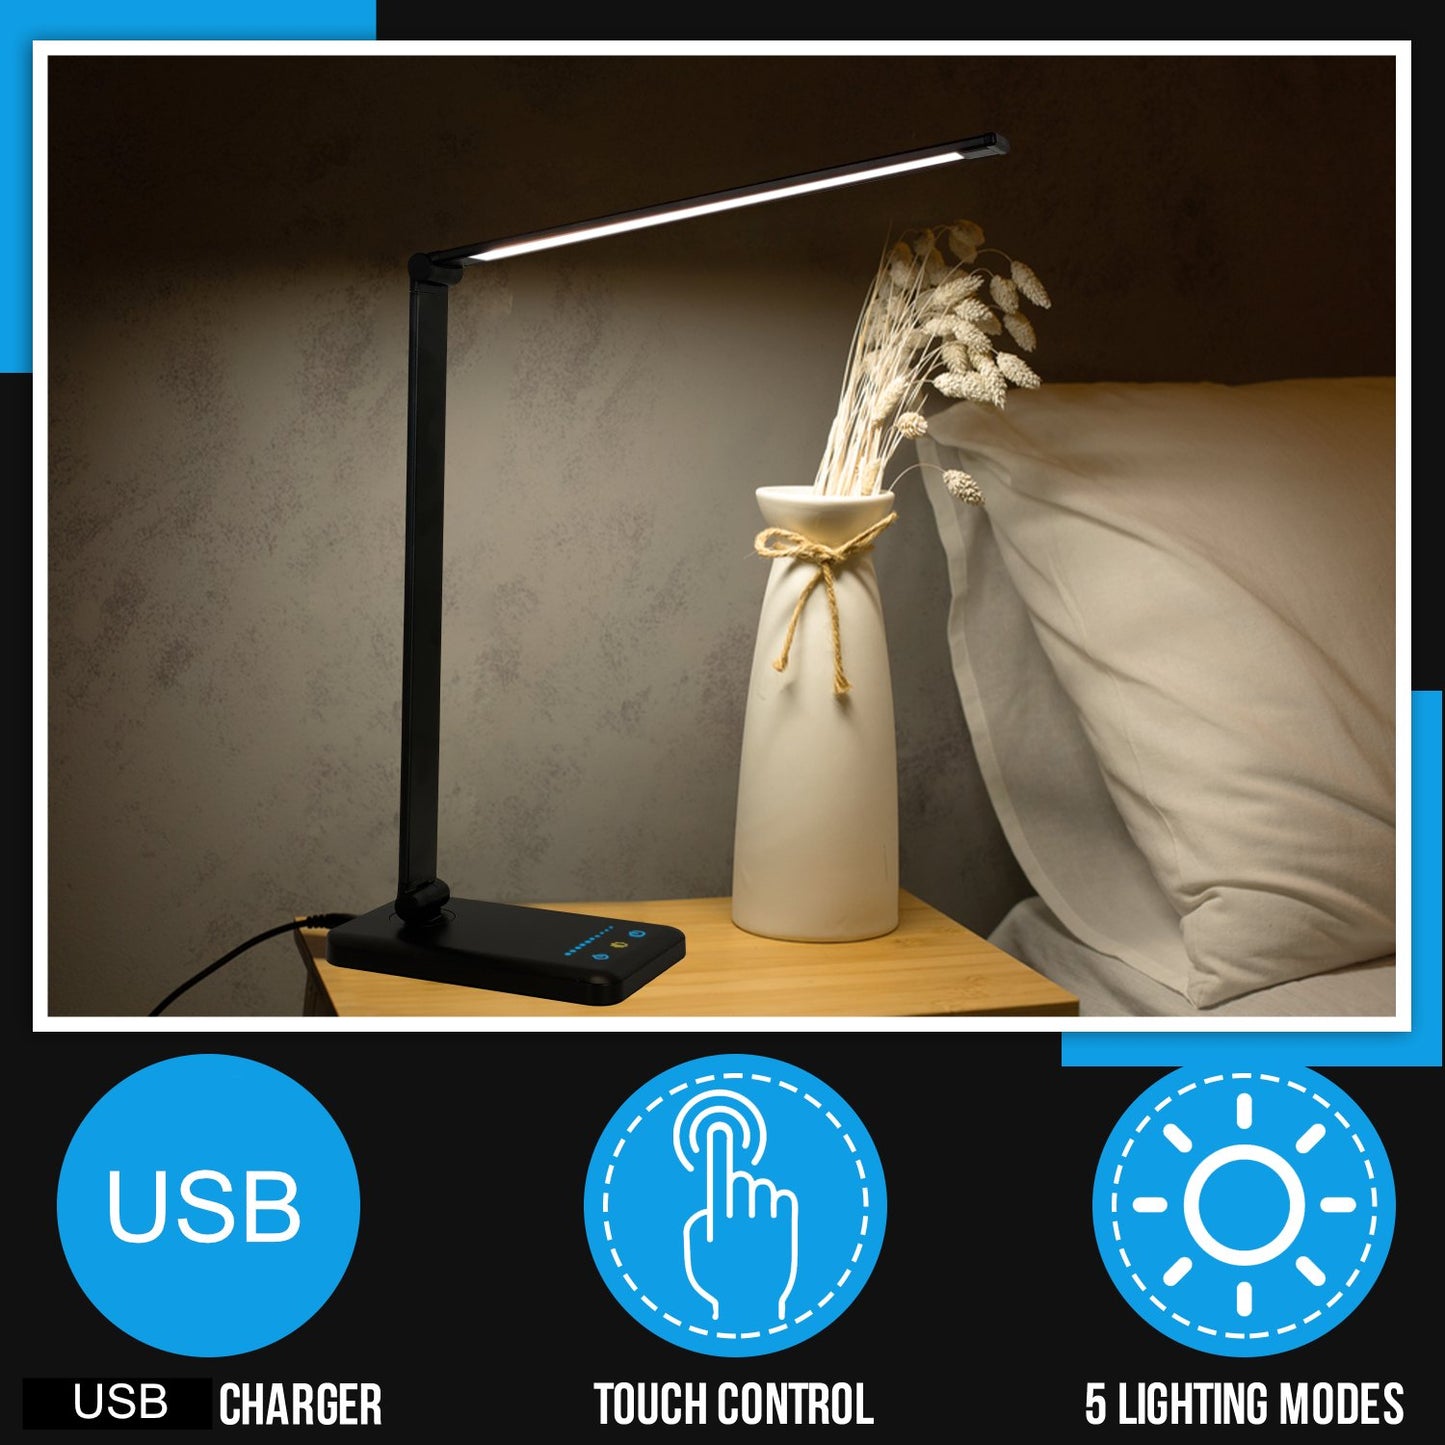 LED Aluminum Desk Lamp with USB Charging Port (Black)